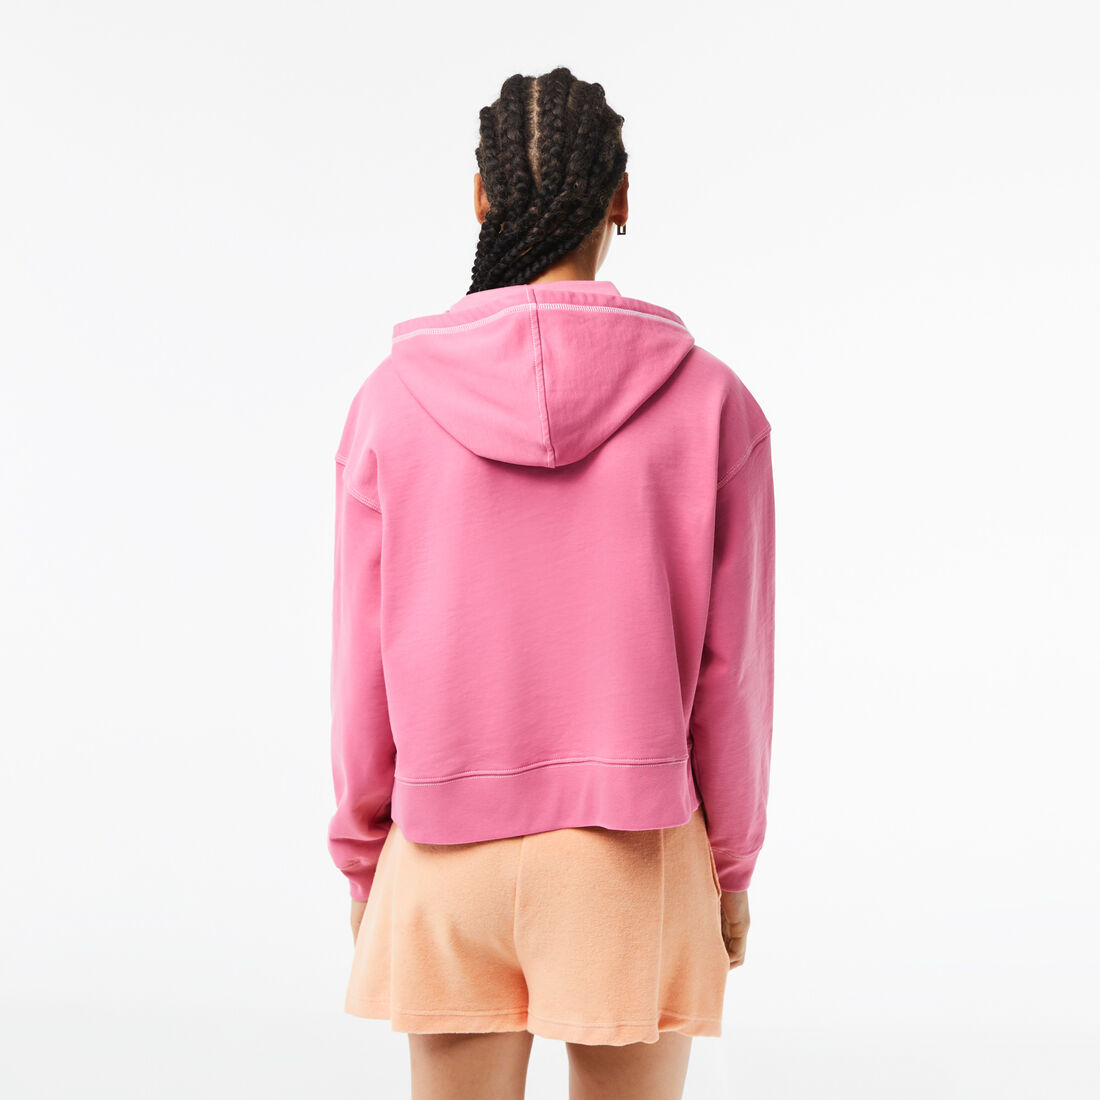 Lacoste Texture Print Hoodie Sweatshirts Damen Rosa | CQTY-94802